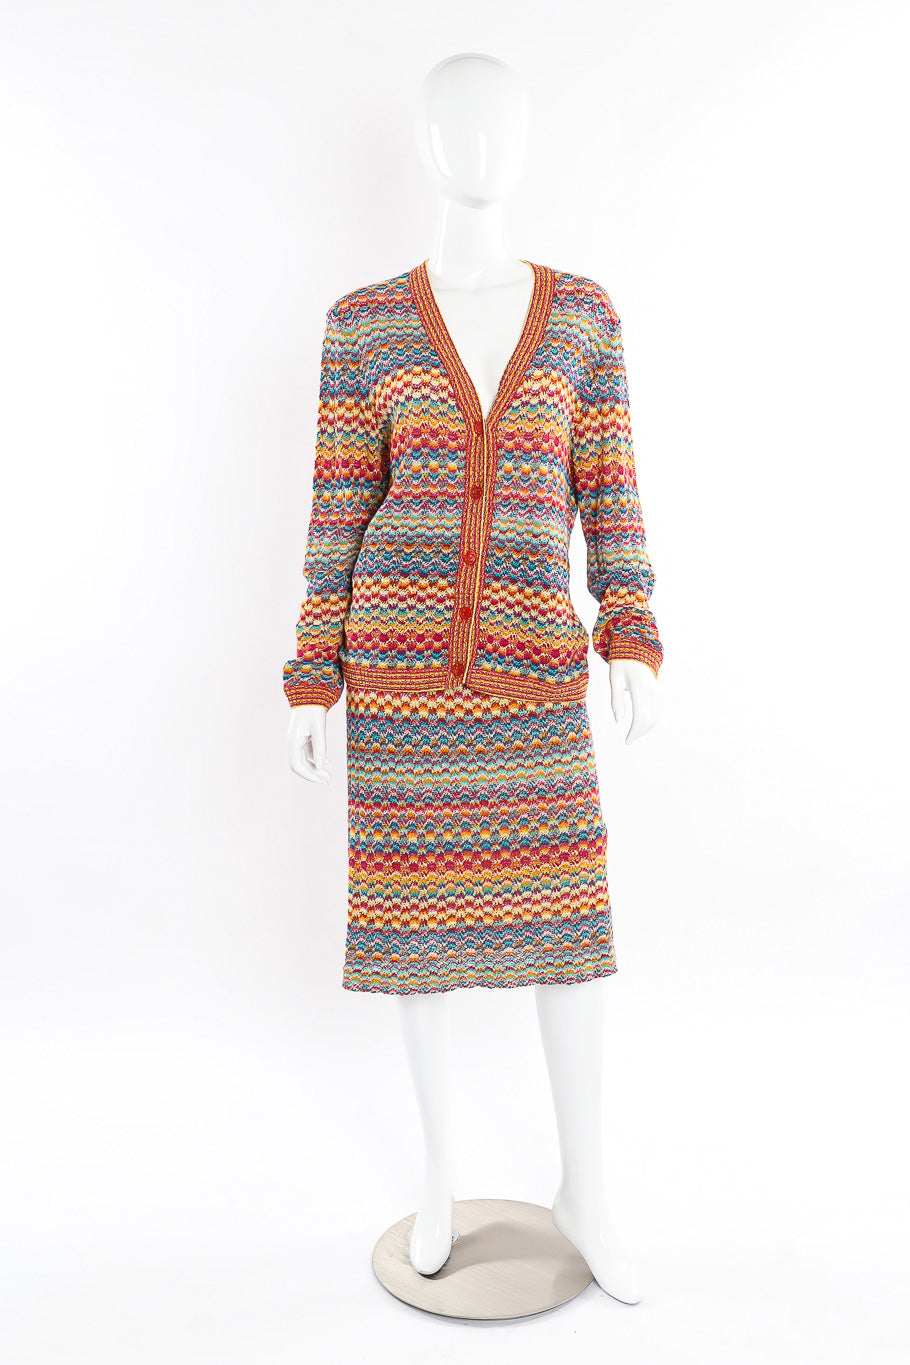 Scallop stripe classic knit 2 piece set by Missoni mannequin full length @recessla